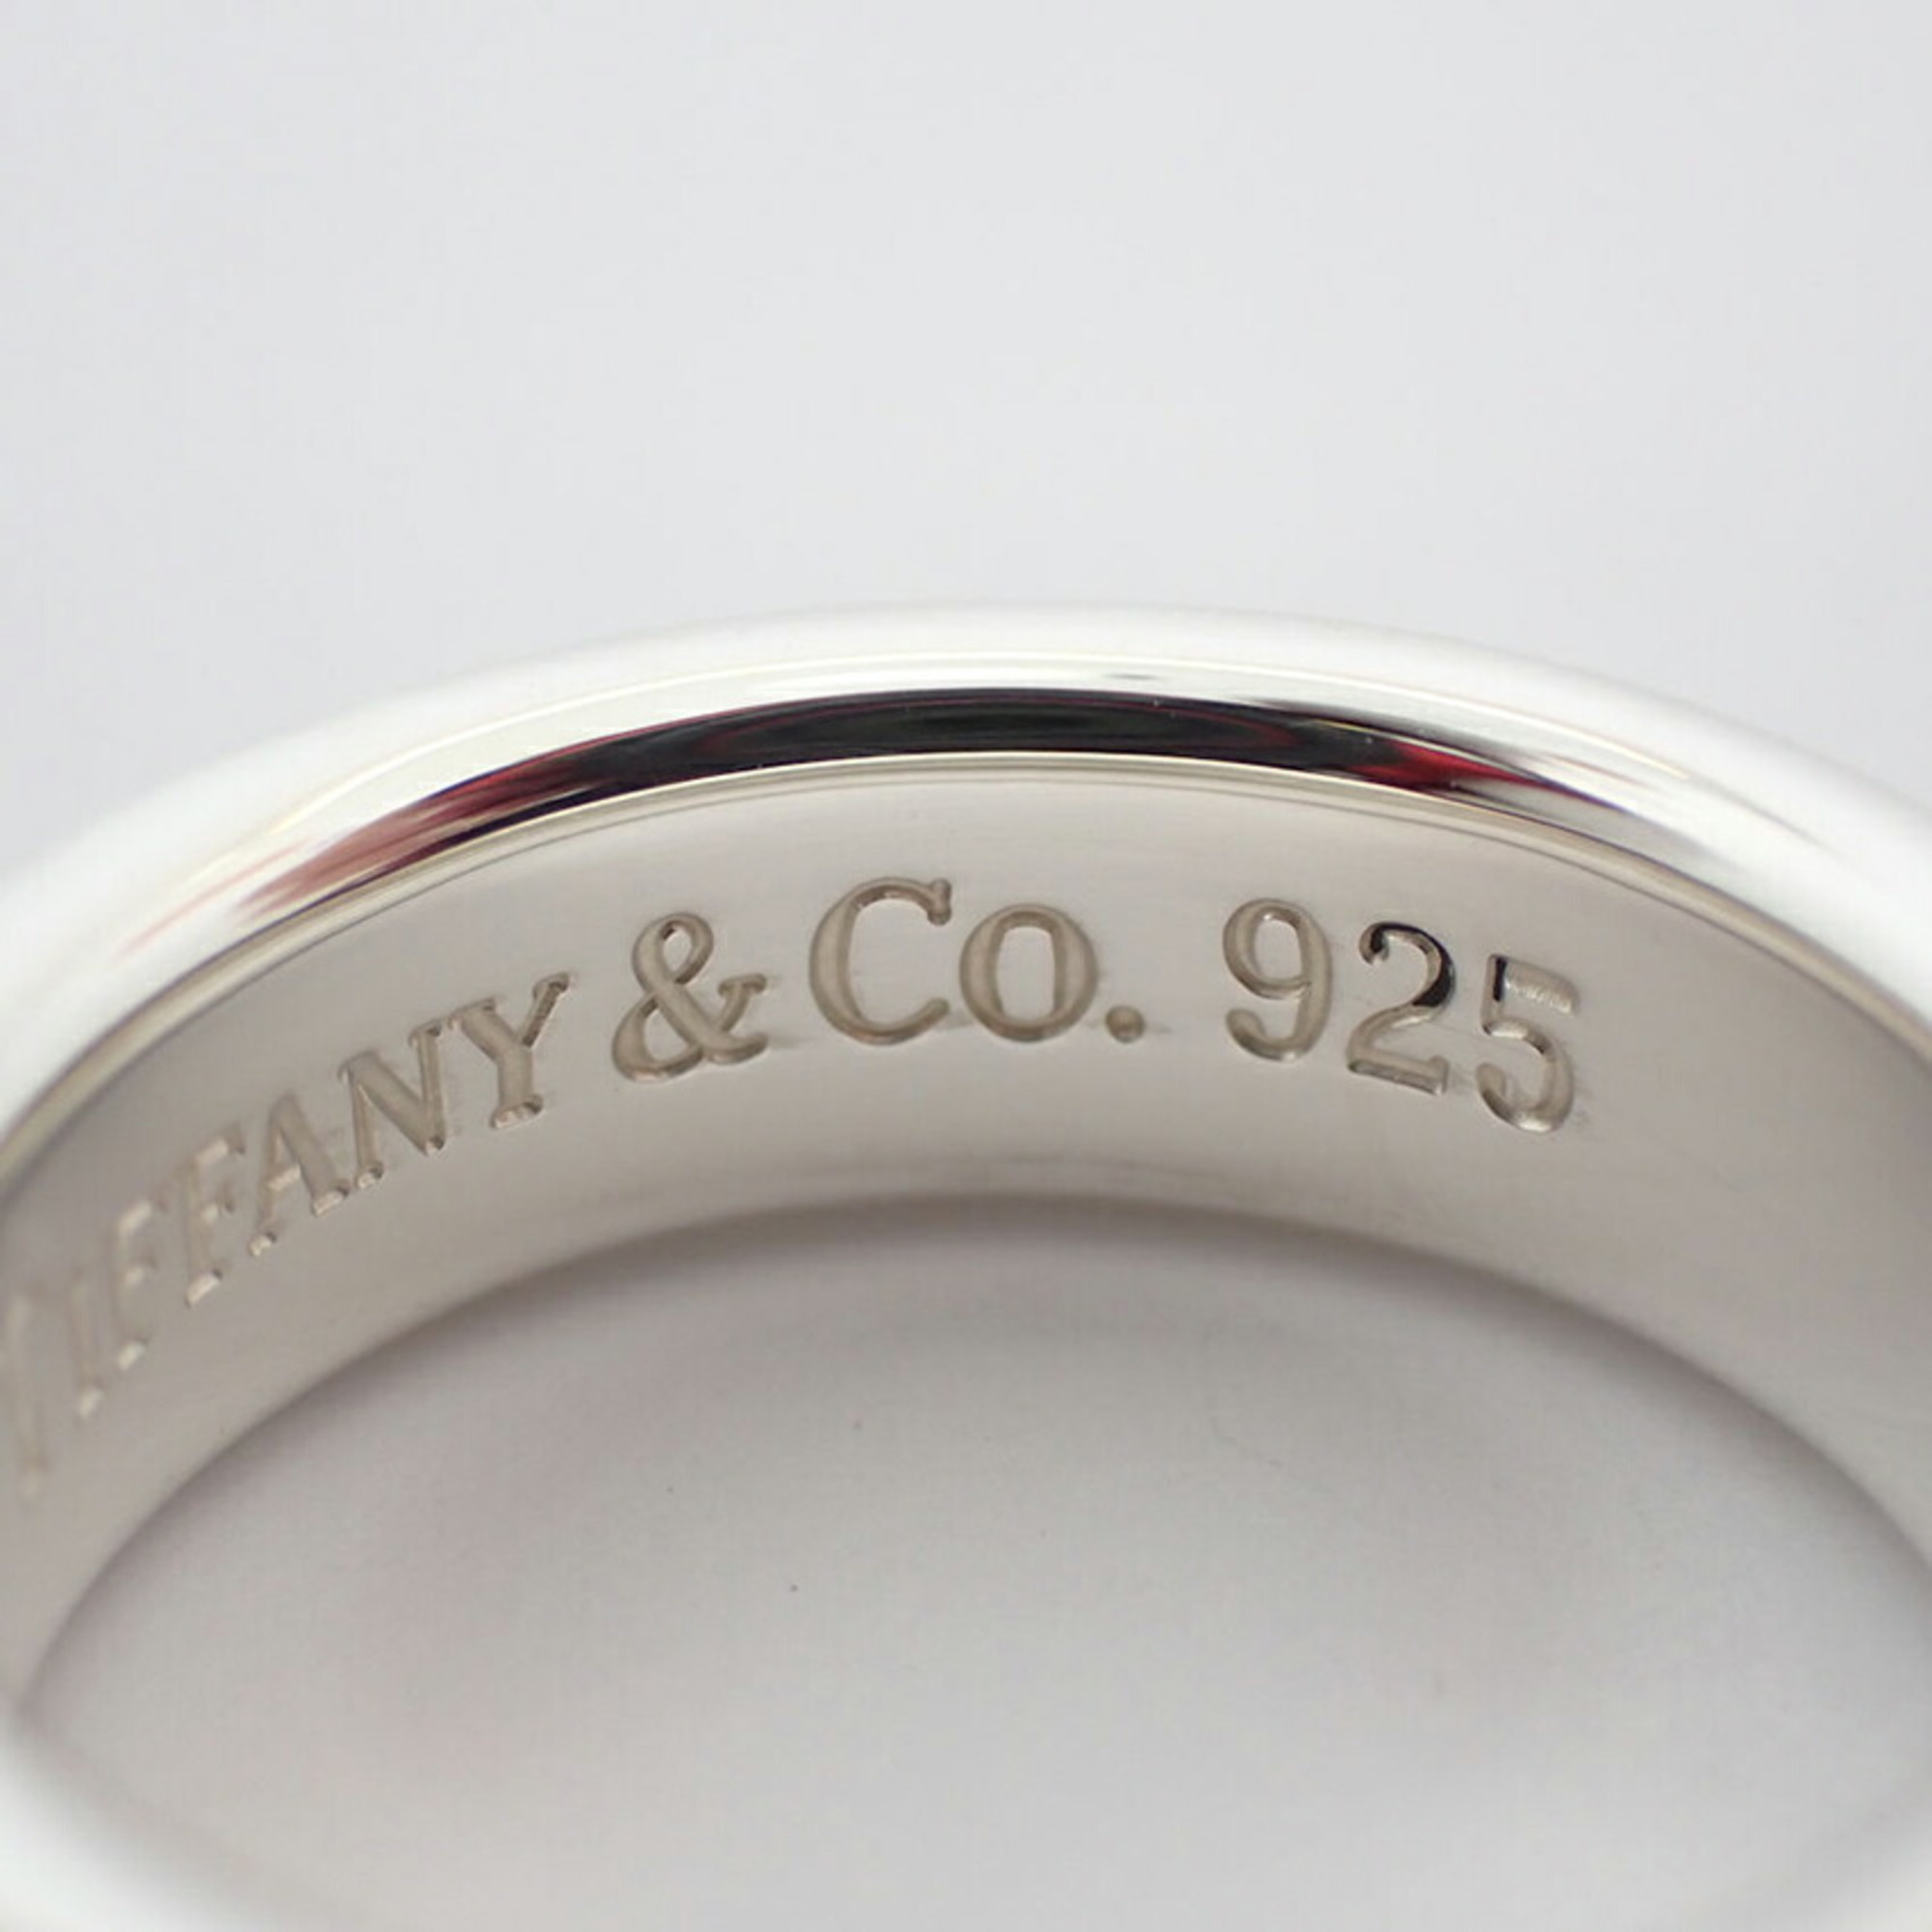 TIFFANY 925 1837 Ring No. 14